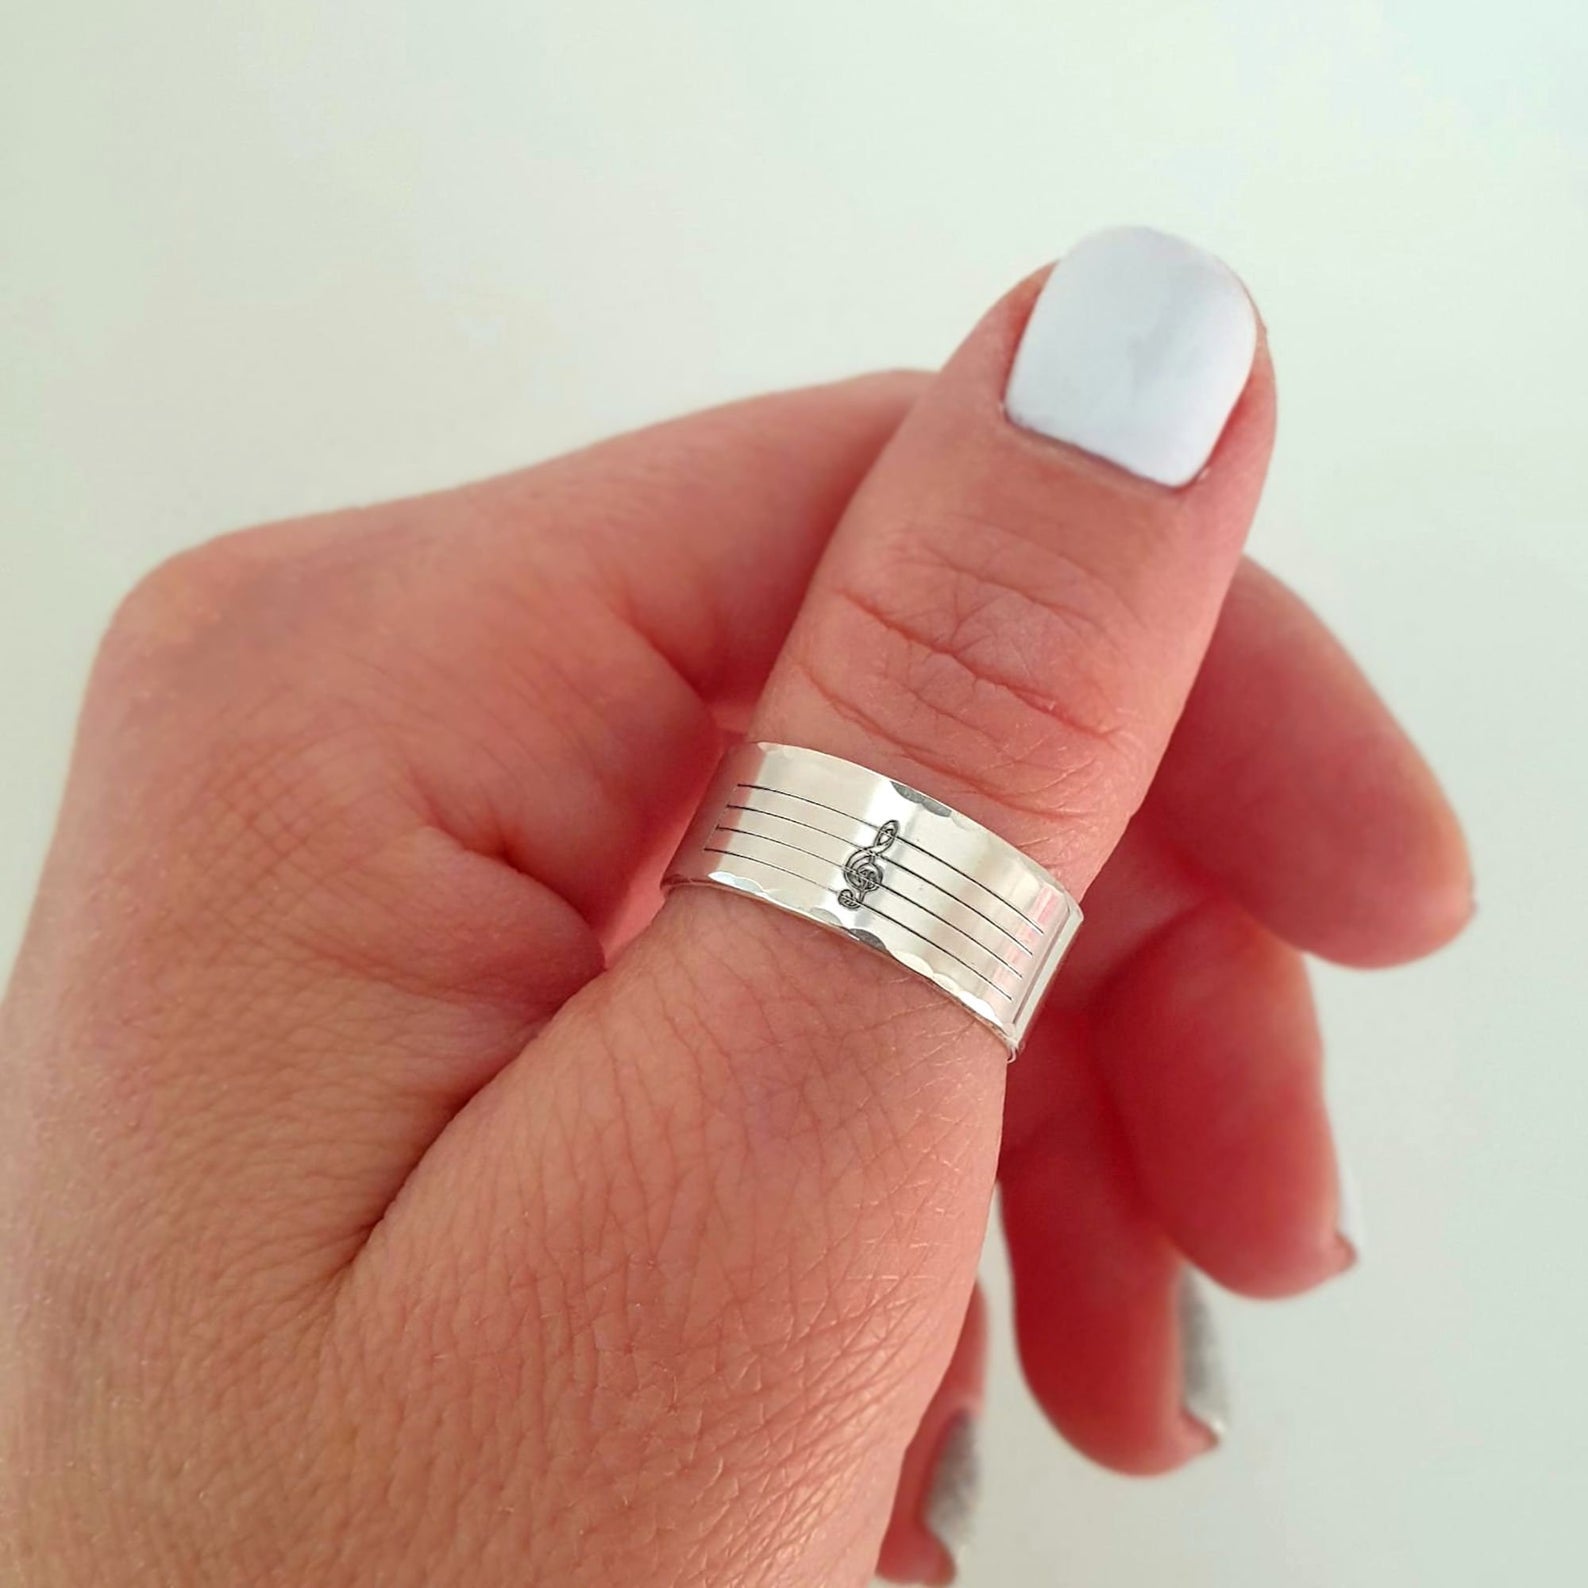 7mm) Unisex or Women's Silver Tone Stainless Steel Ring Band Engraved  Flower Vine / Floral Design Wedding ring band Ring - Ring Blingers |